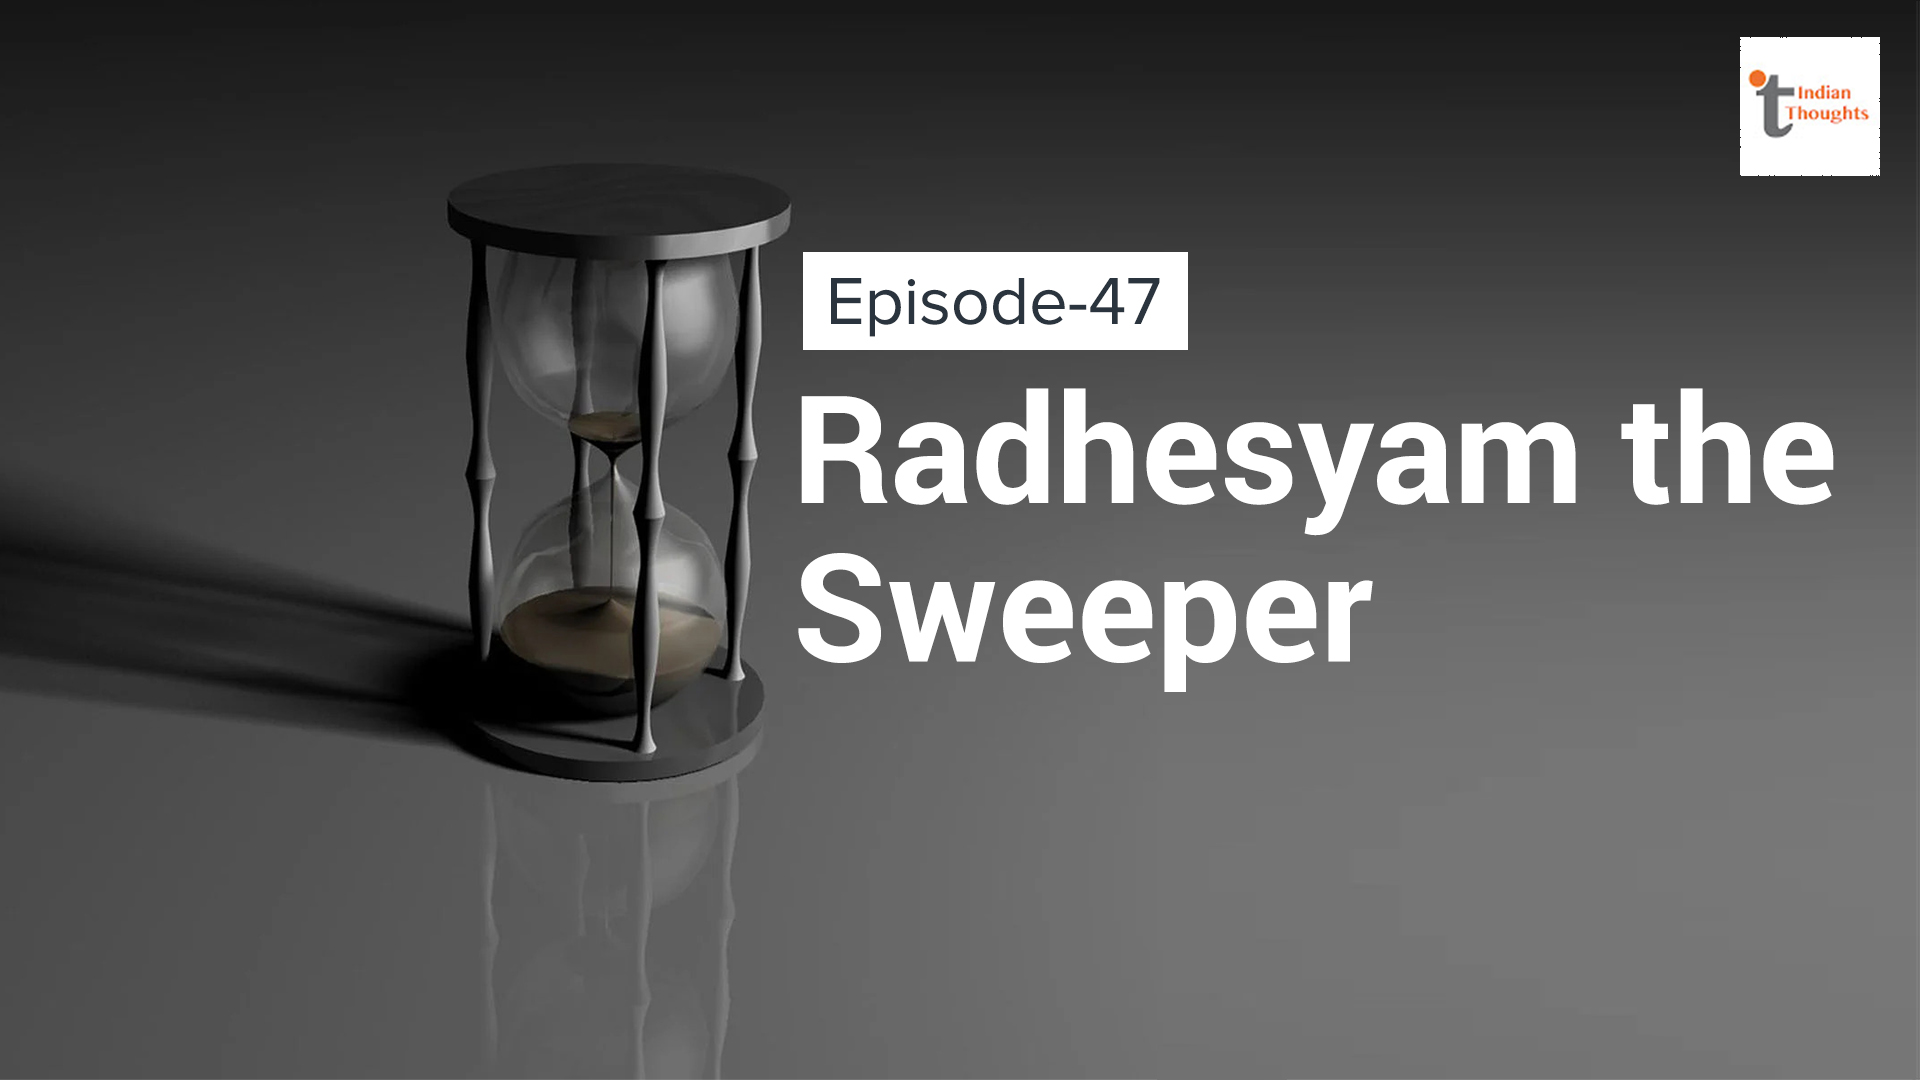 Radhesyam the sweeper